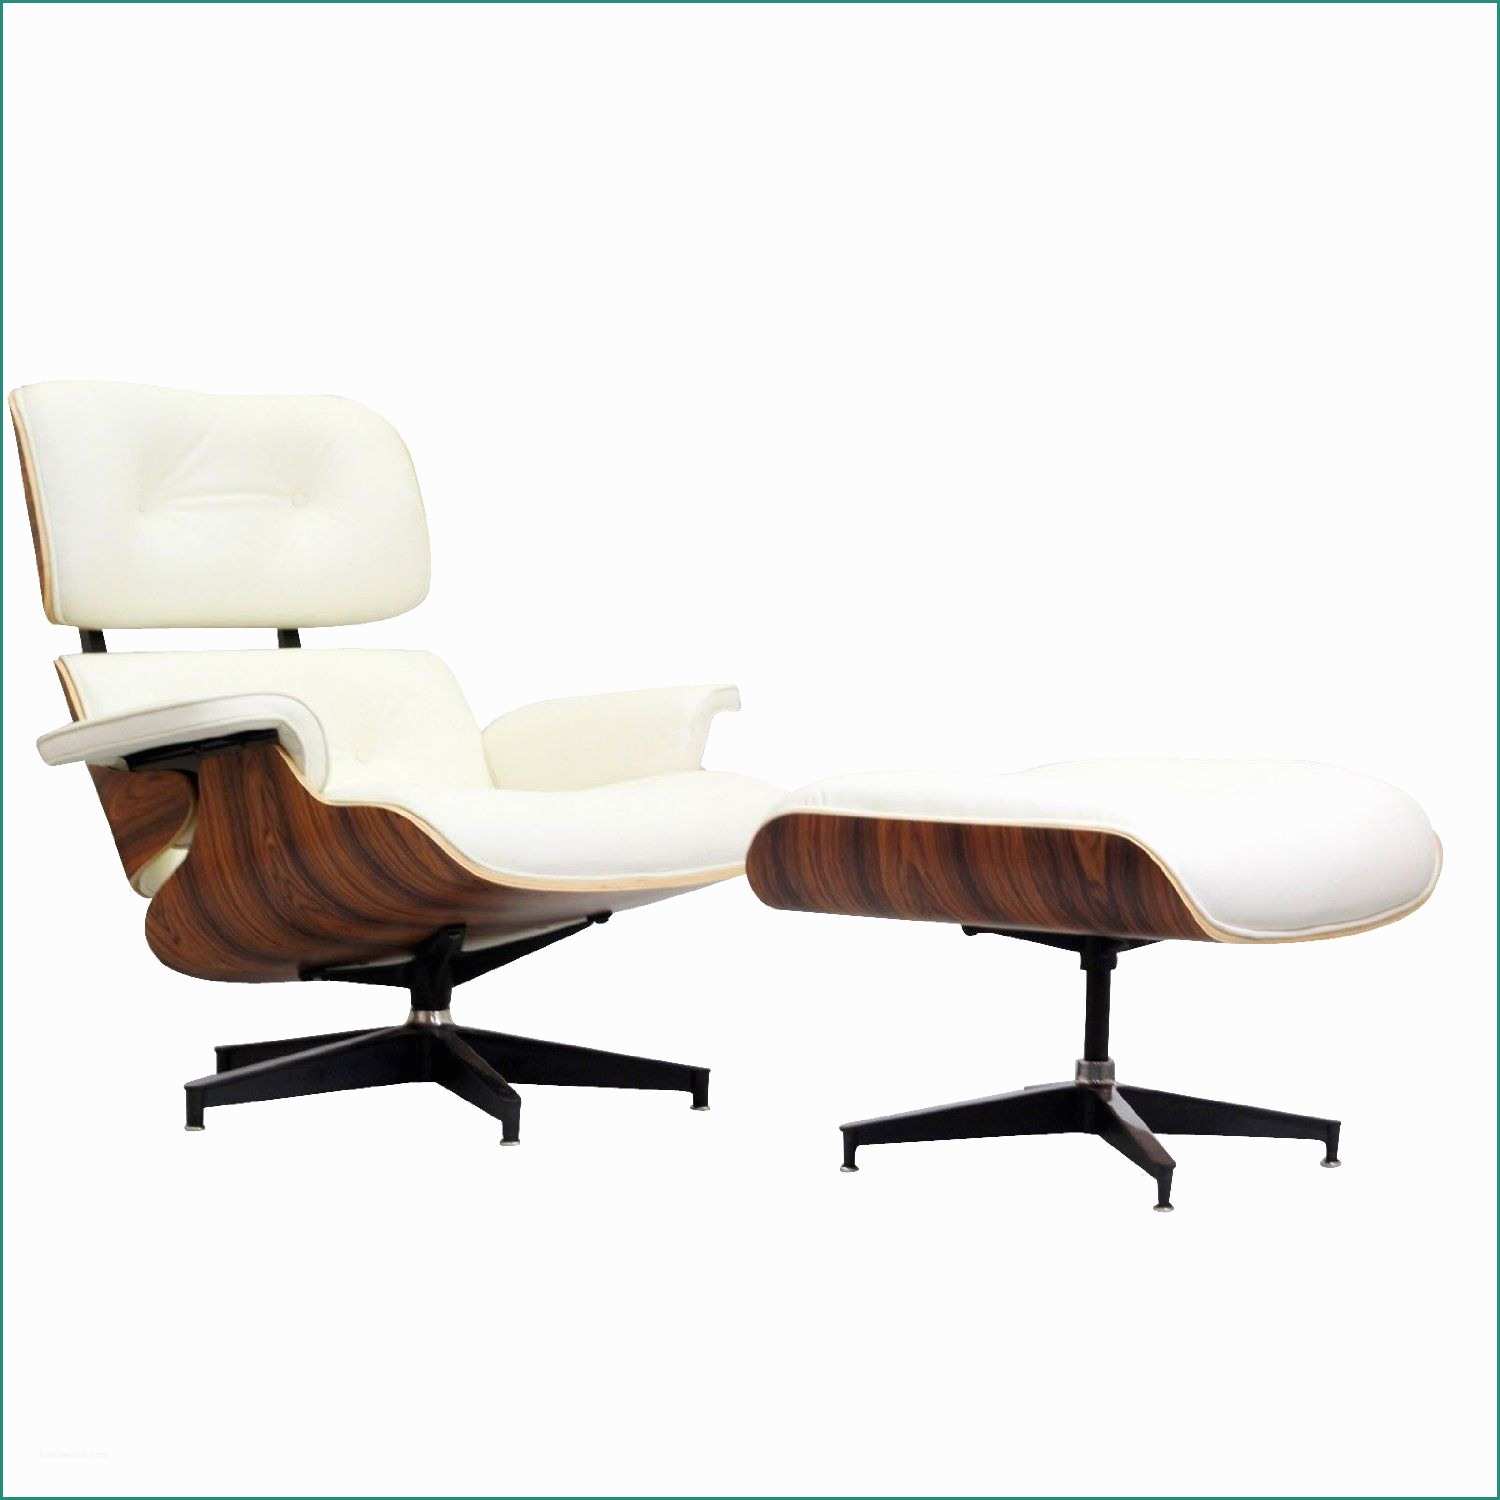 Poltrona Frau Catalogo E Amazon Lexmod Eaze Lounge Chair In White Leather and